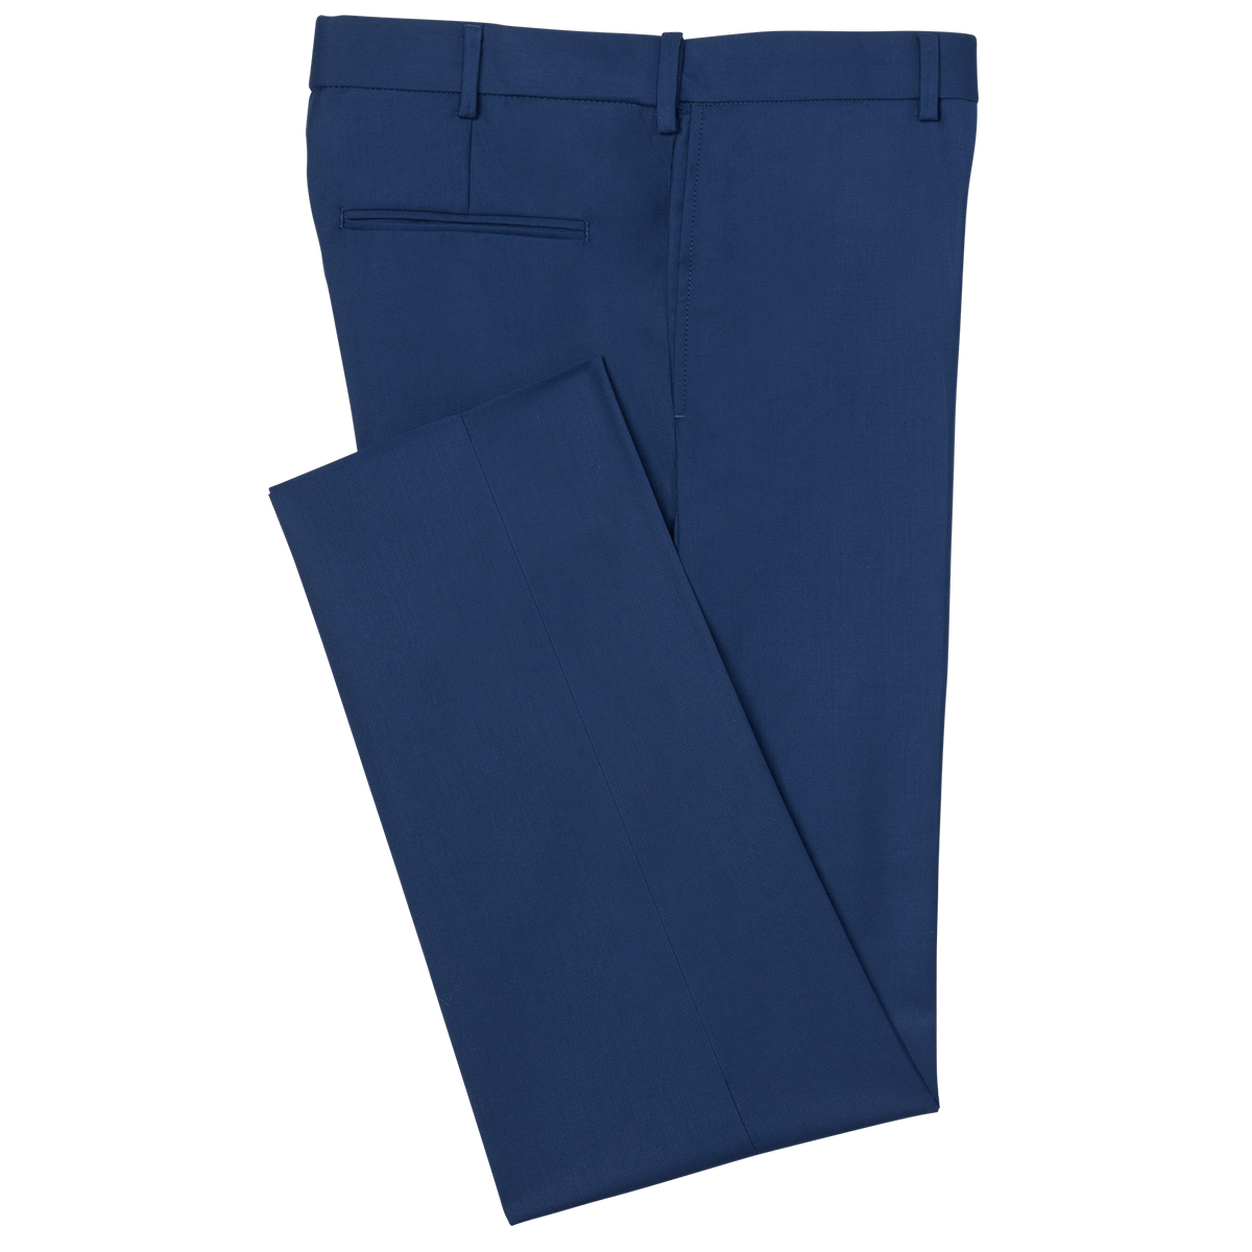 Cobalt Blue Stretch Suit Separates Pants image number null